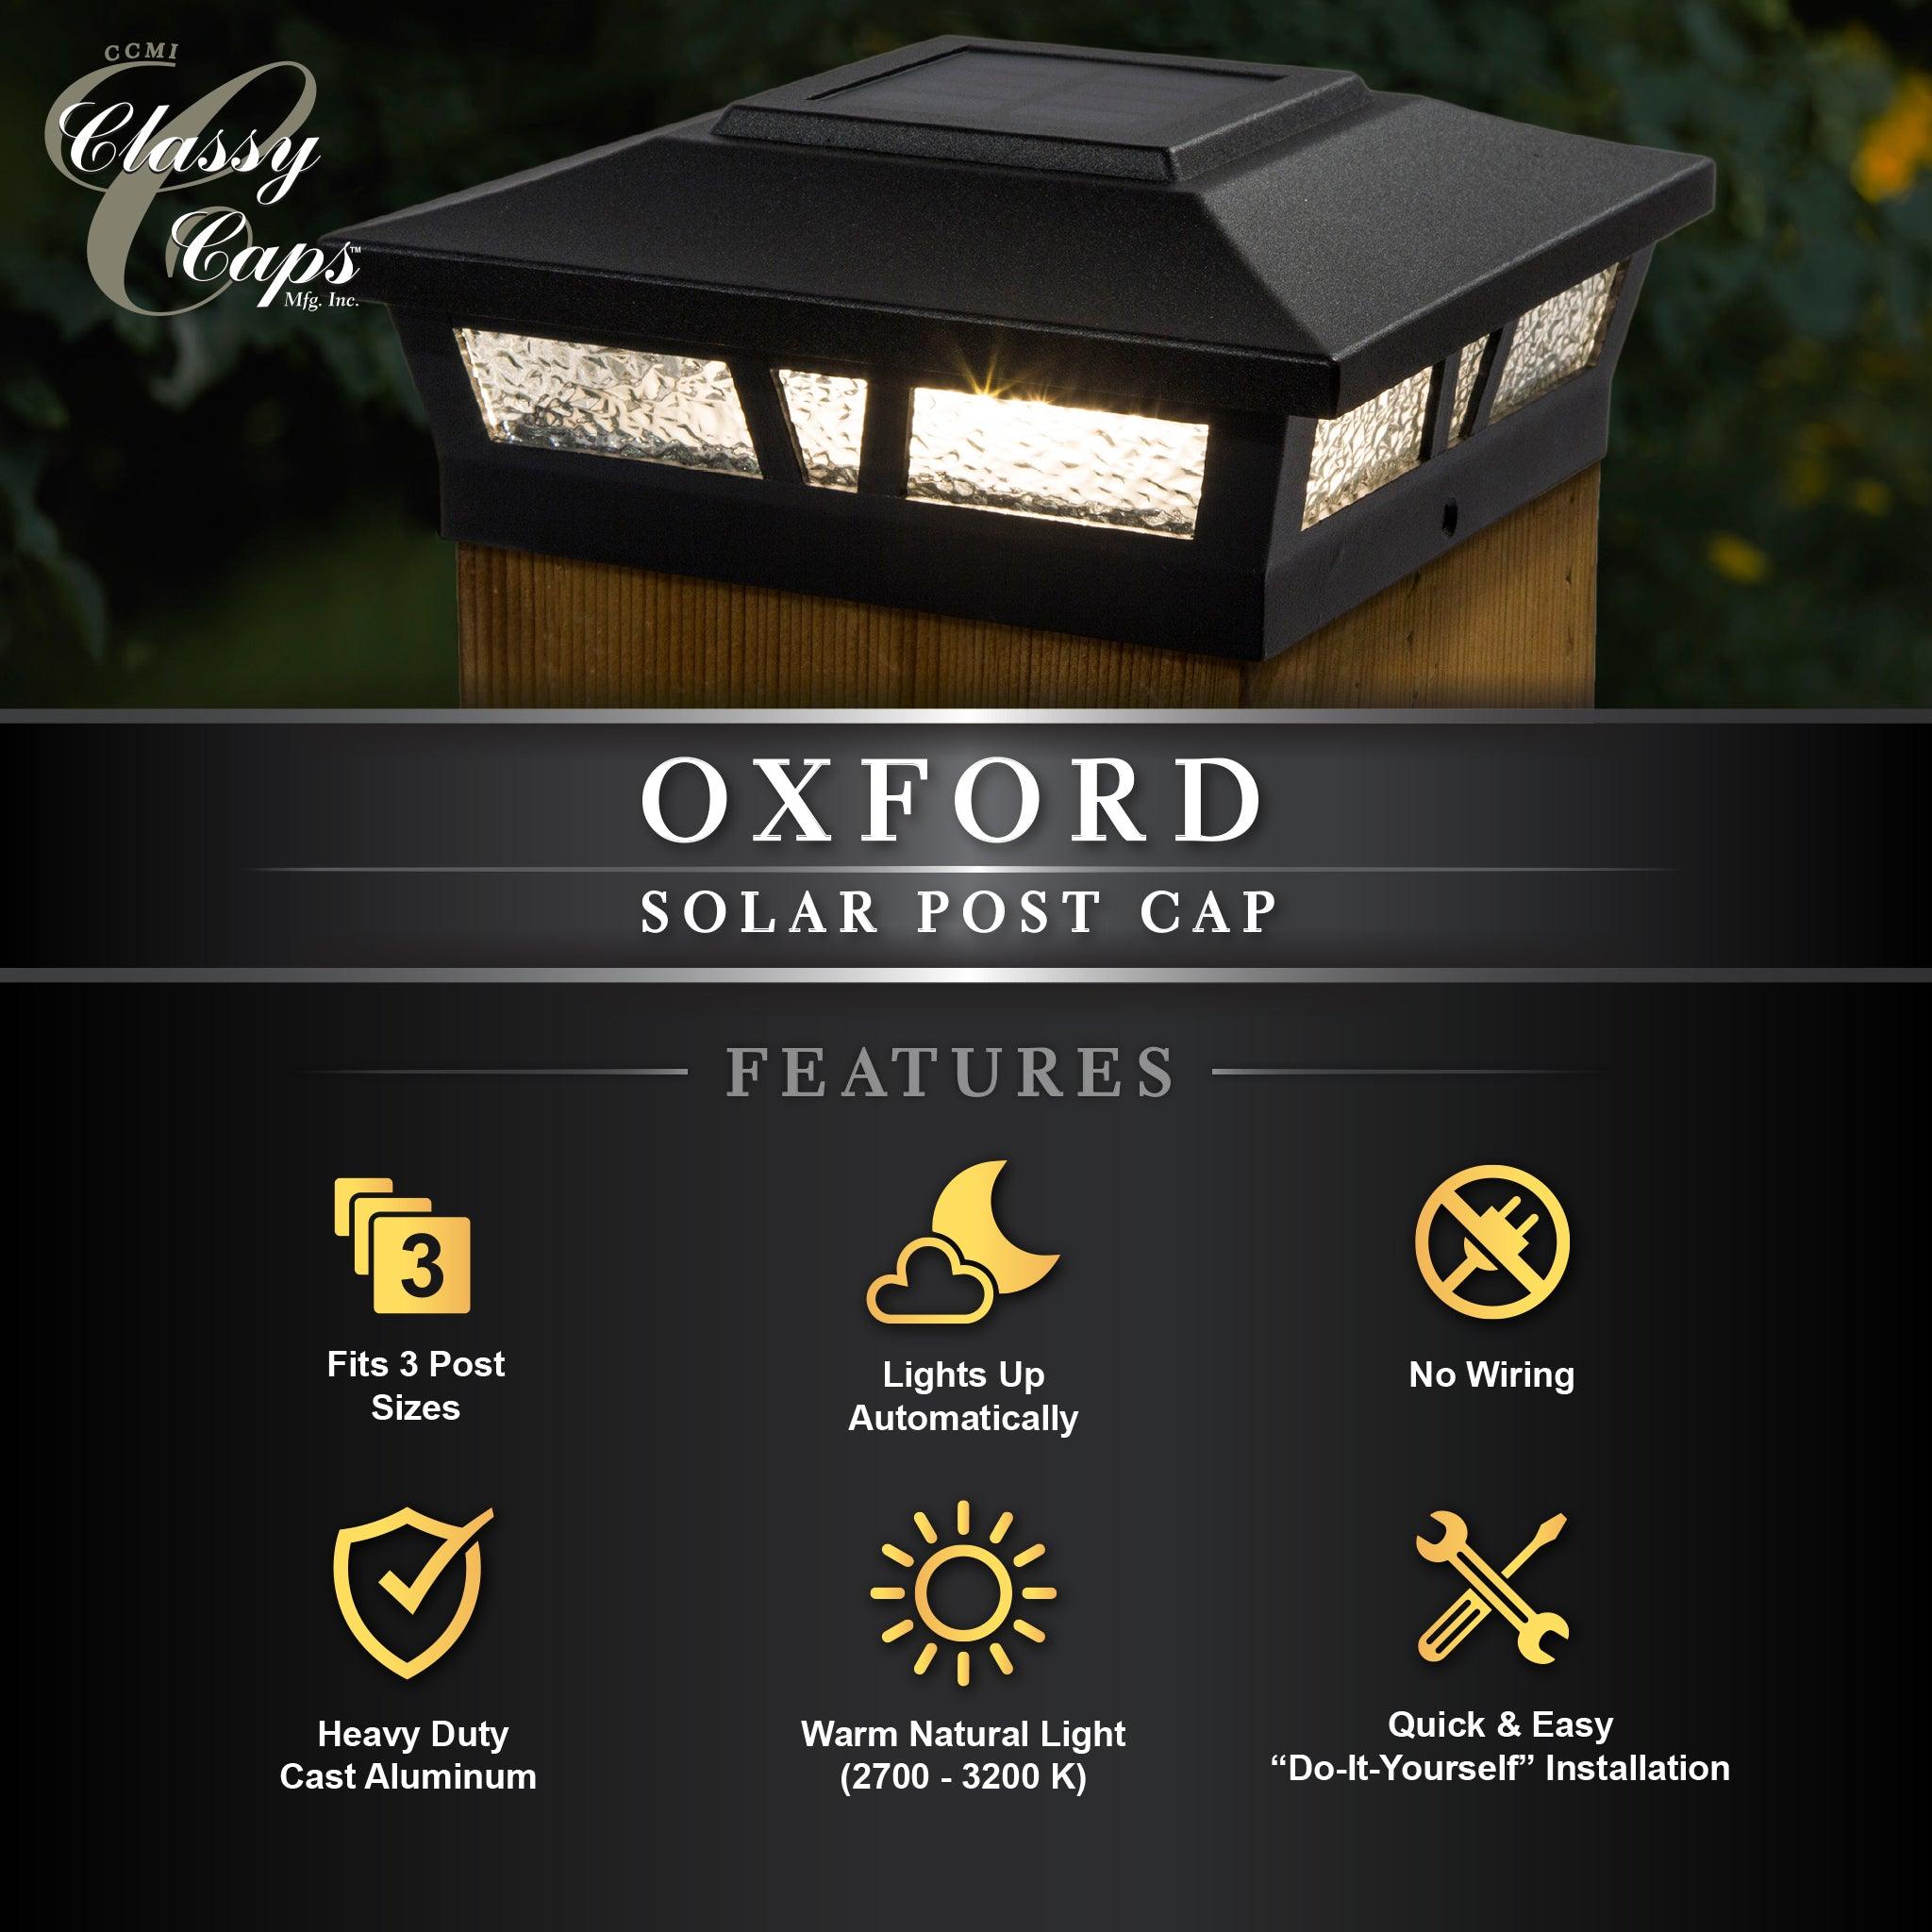 Oxford Solar Post Cap - Black - Classy Caps Mfg. Inc.